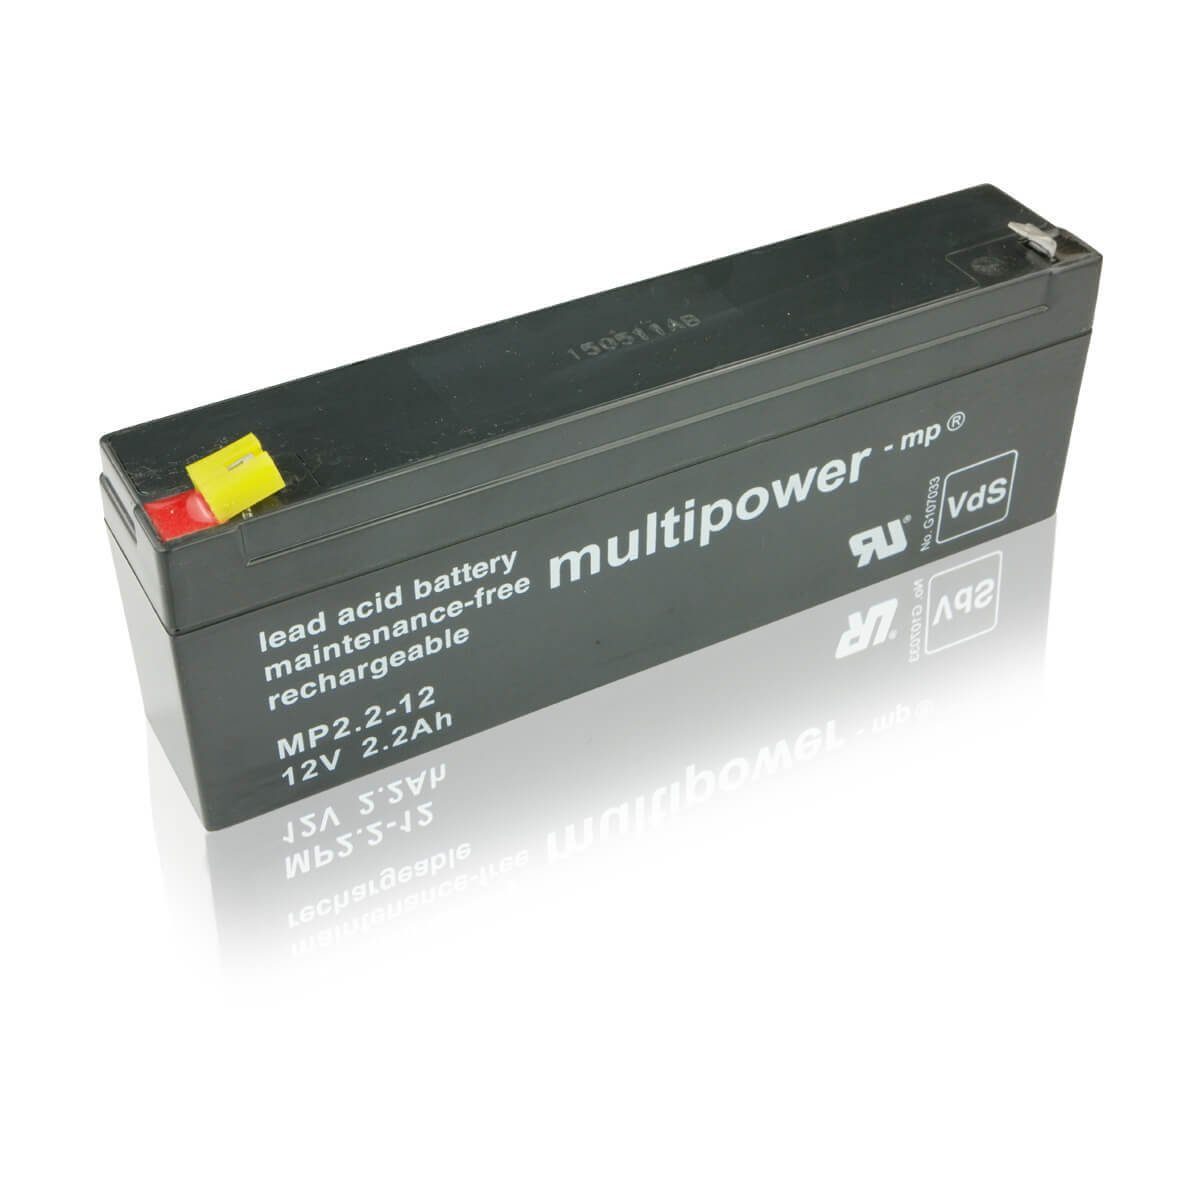 Multipower MP2.3-12 AGM Batterie 12V 2,3Ah Akku mit VdS Zulassung Batterie, (12 V V)